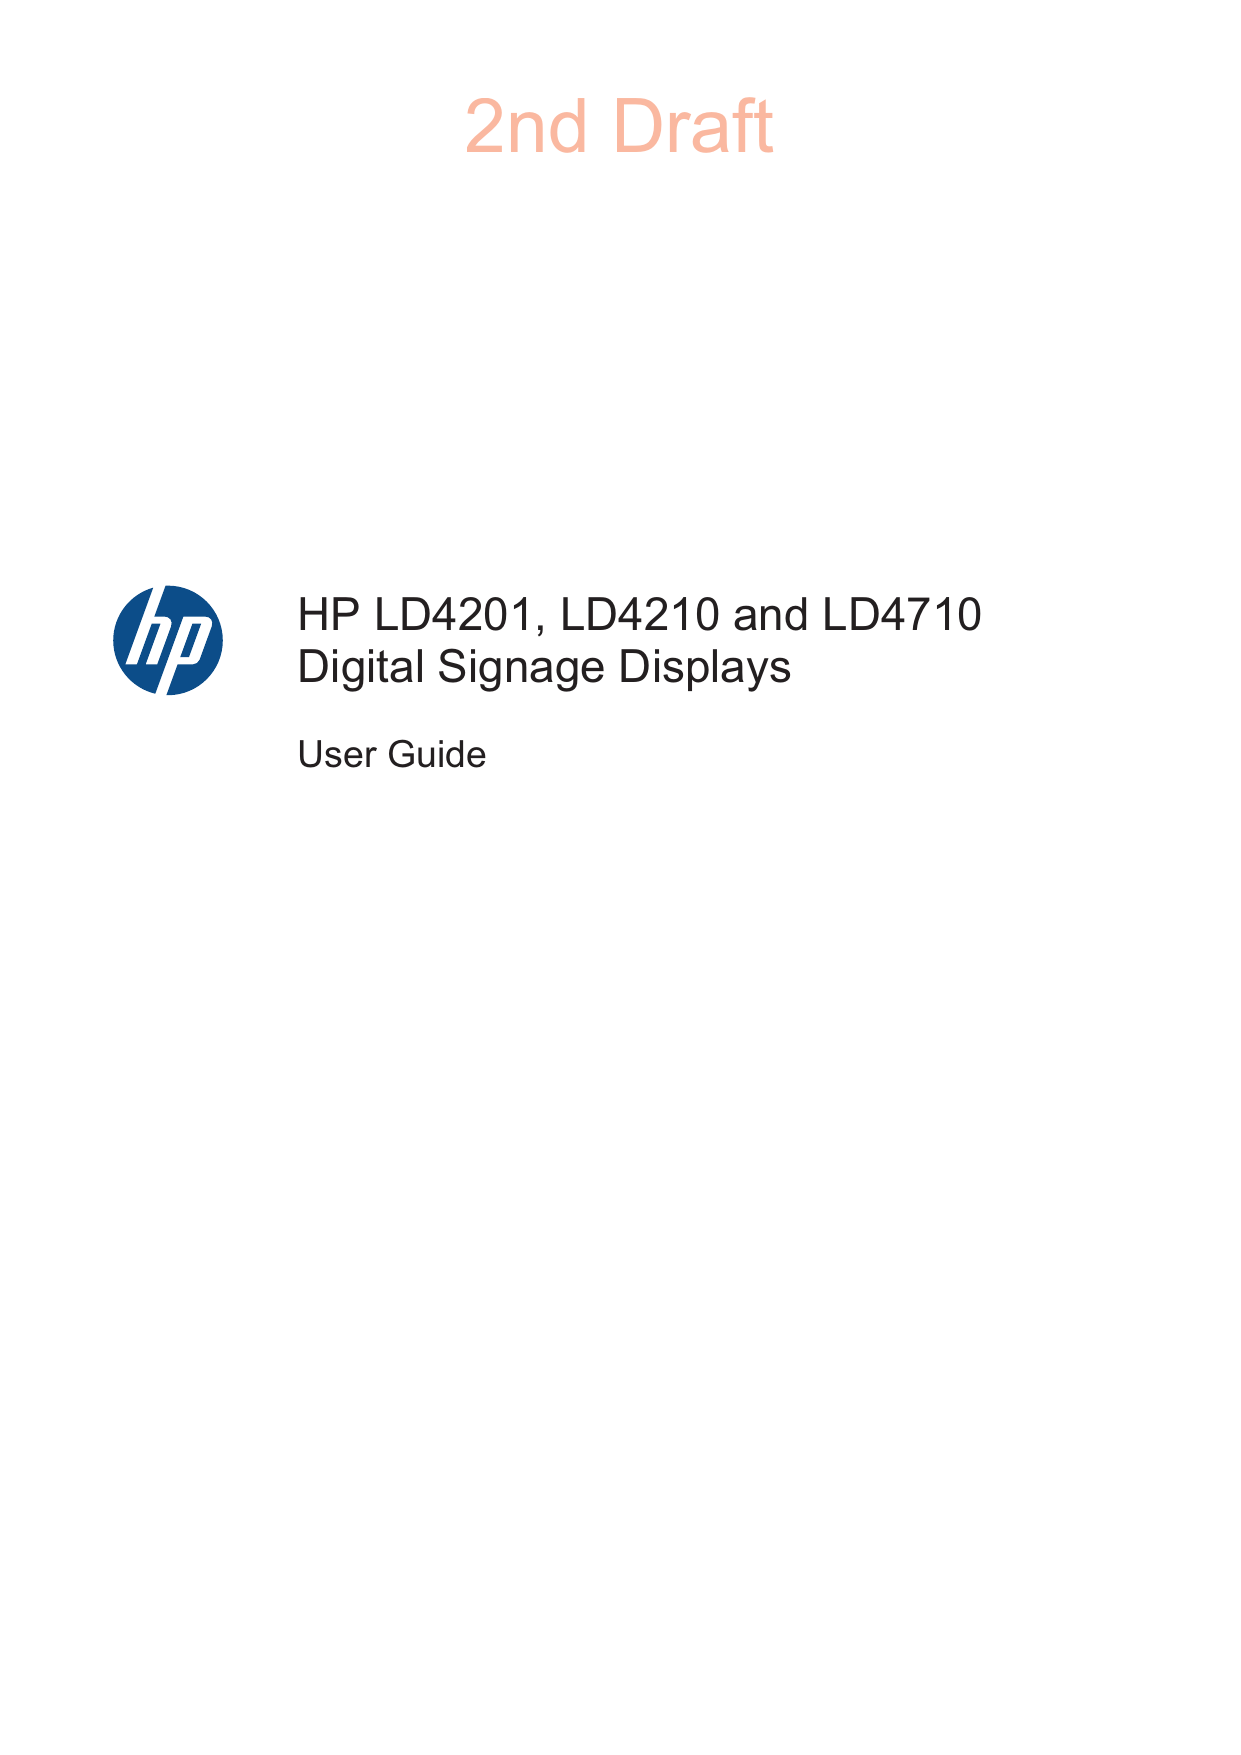 HP LD4201, LD4210 and LD4710Digital Signage DisplaysUser Guide2ndDraft